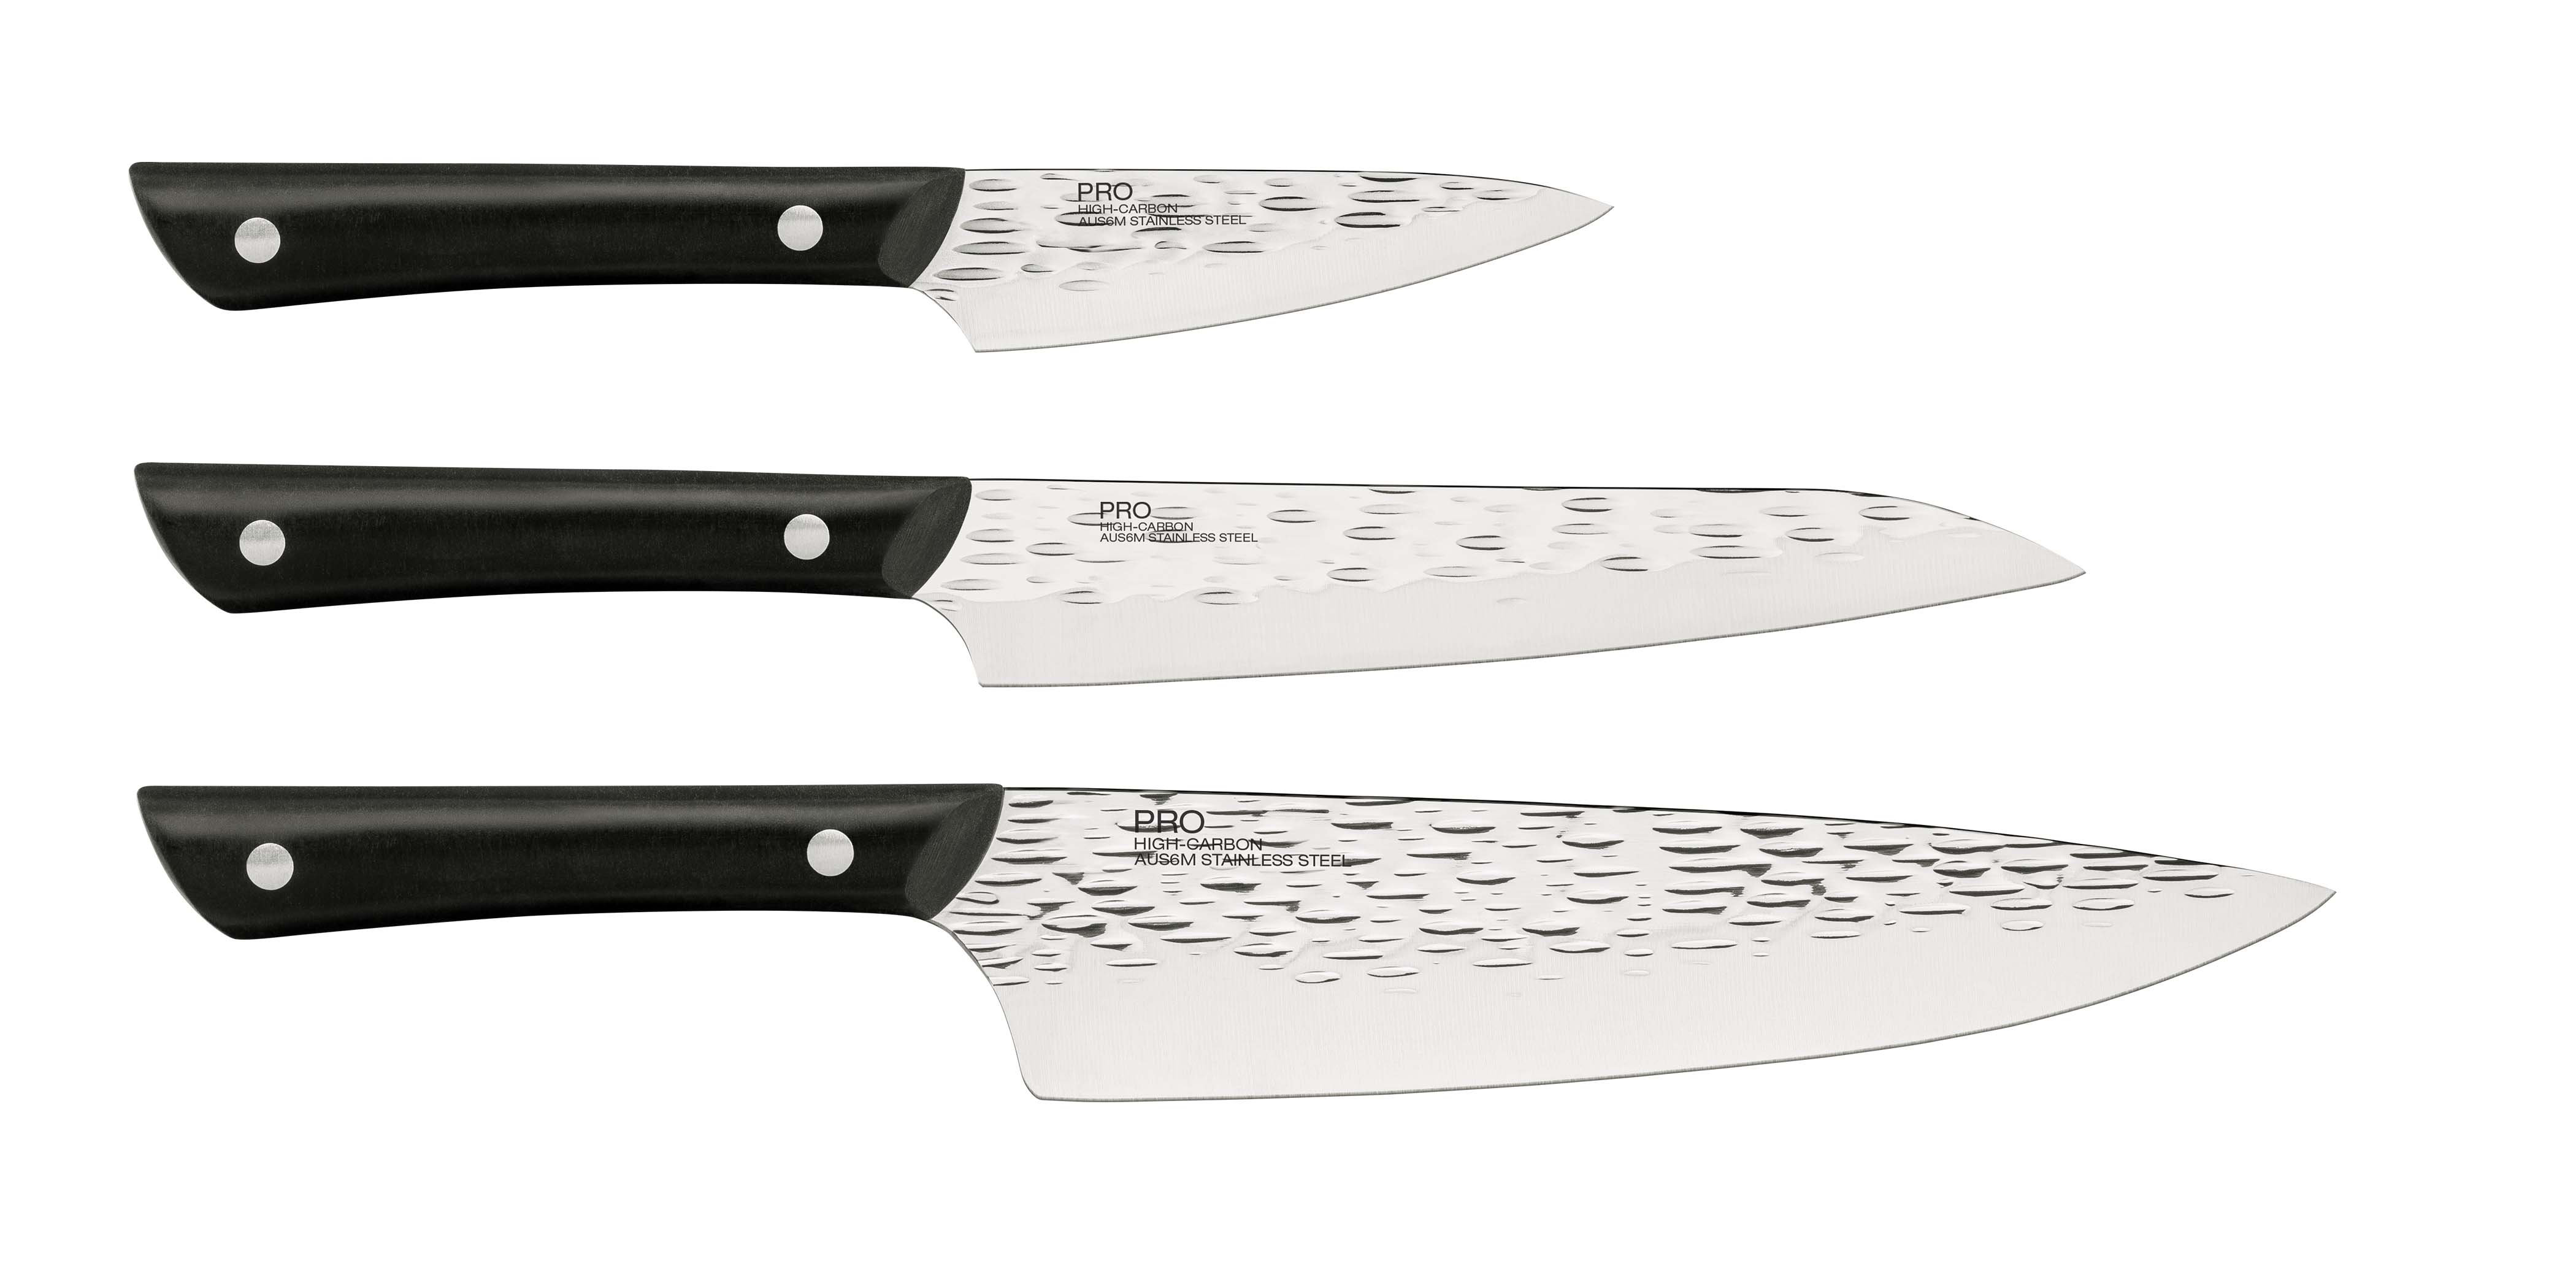 Nutriblade Knife Set by Granitestone Professional Kitchen Chef's